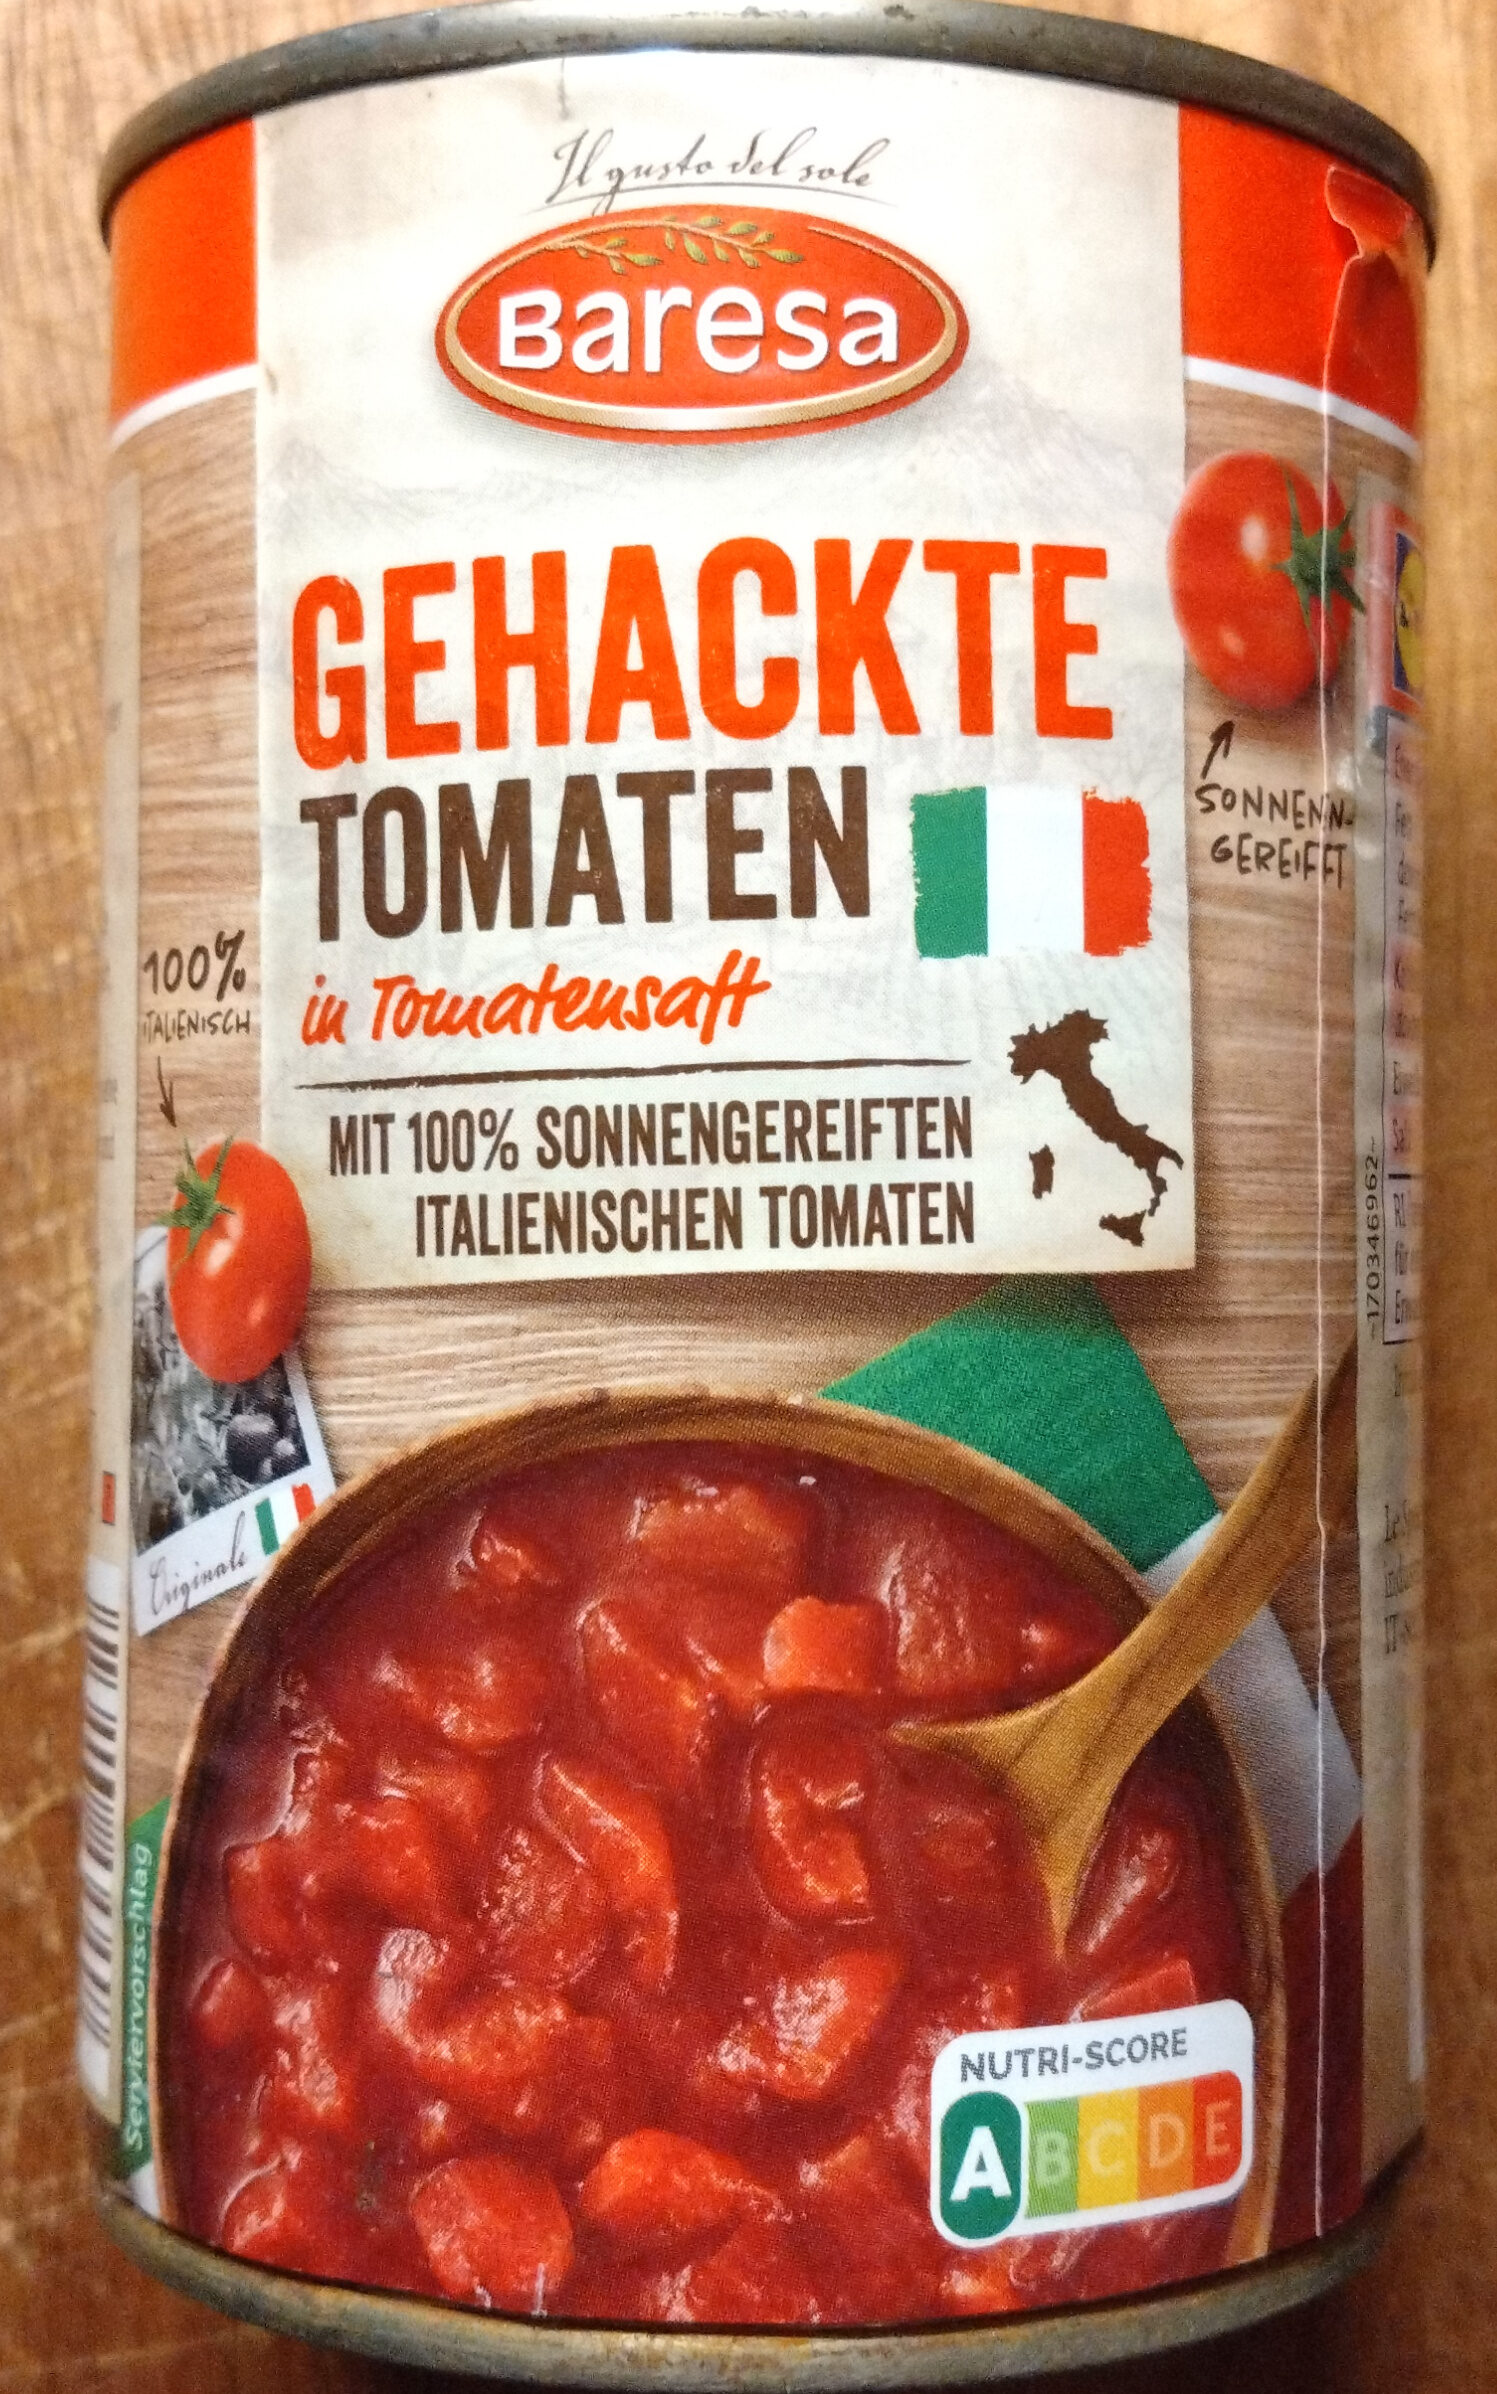 Tomaten gehackt - Prodotto - de